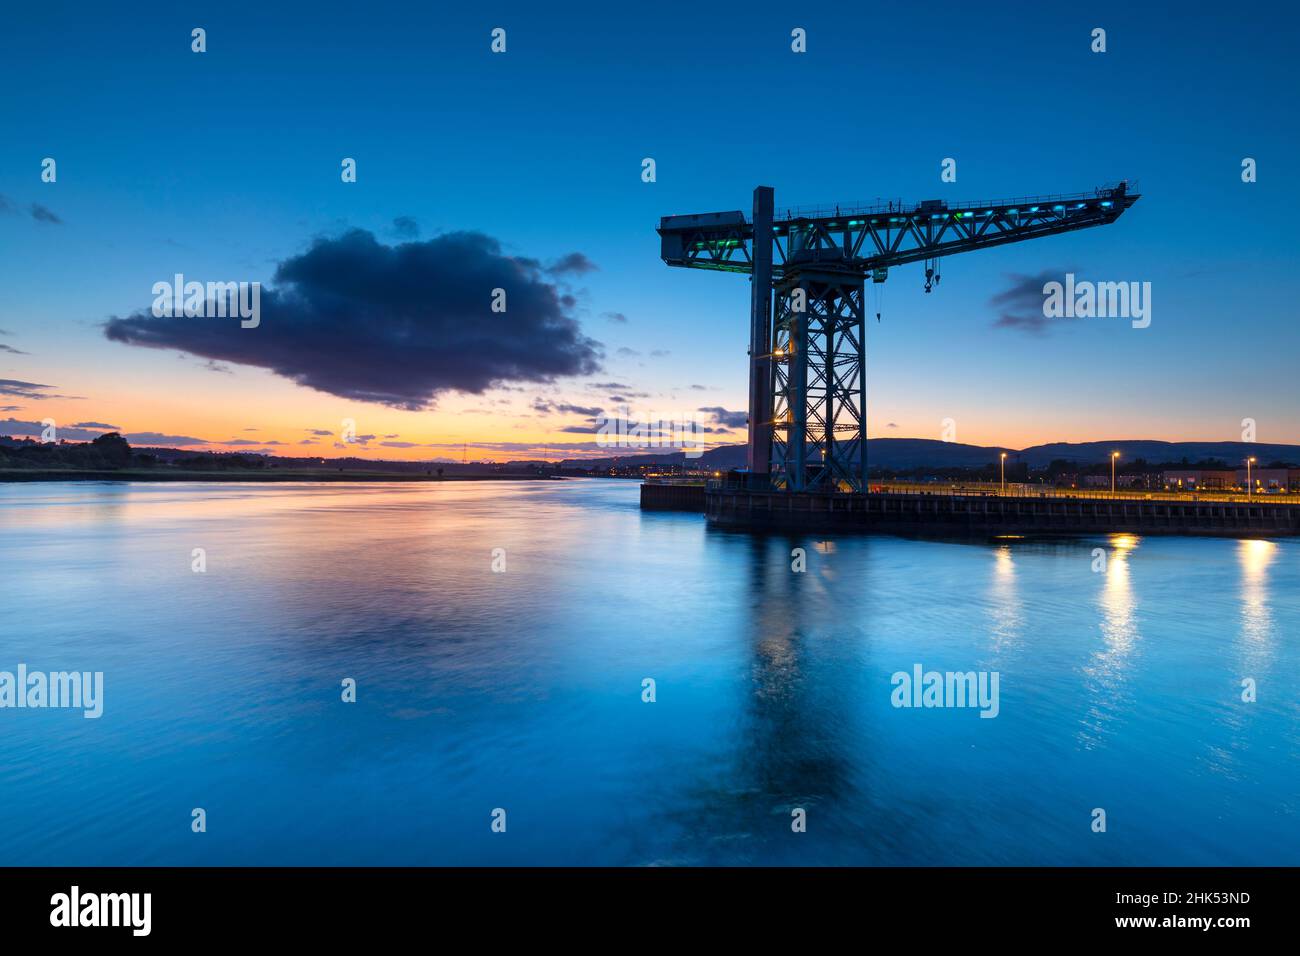 Clydebank Titan, cantilever crane, River Clyde, Scotland, United Kingdom, Europe Stock Photo